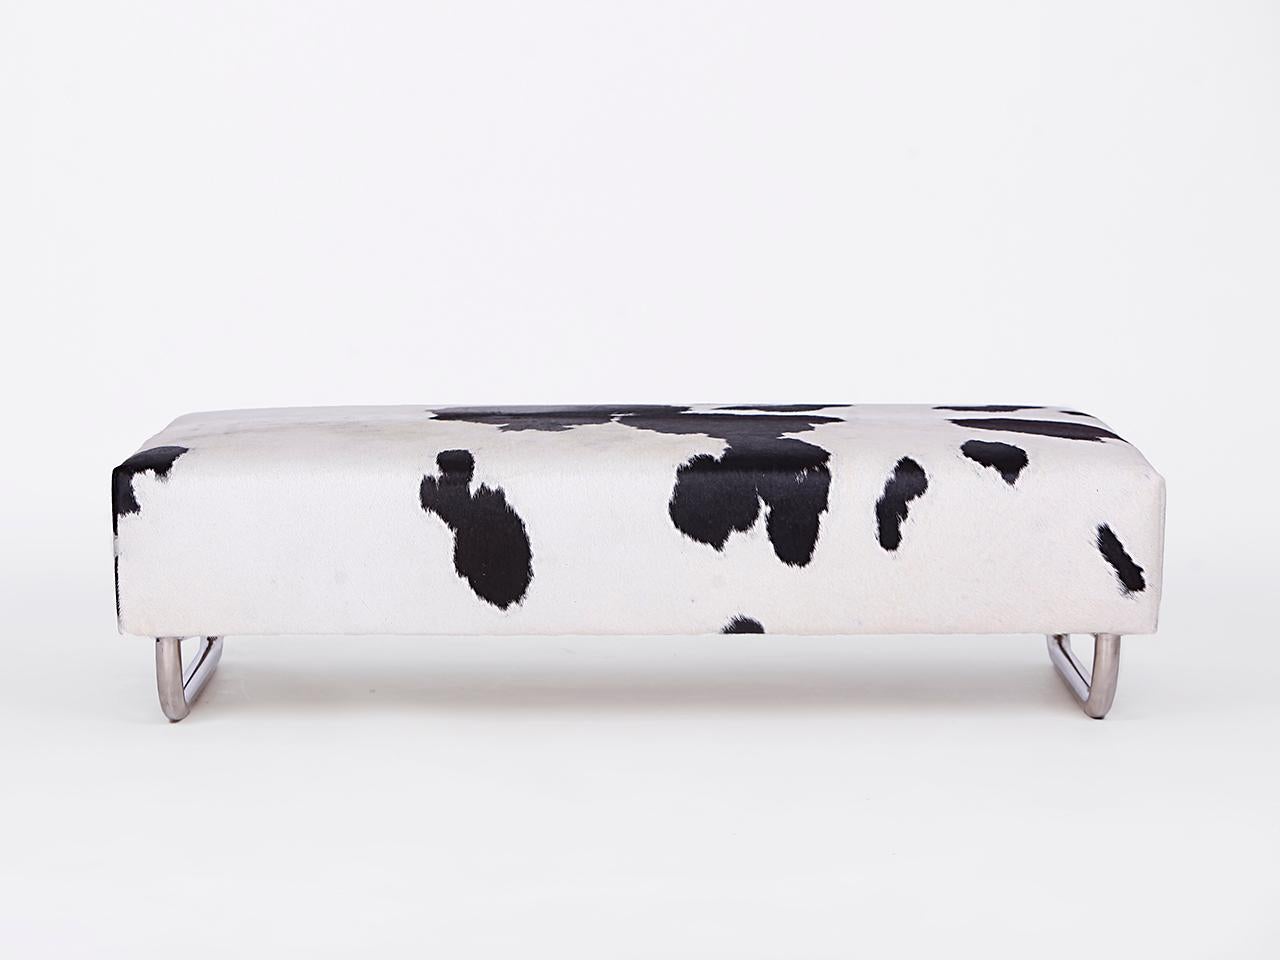 Bauhaus Tubular Steel Bench Ottoman Cow Hide Coffee Table, 1940s For Sale